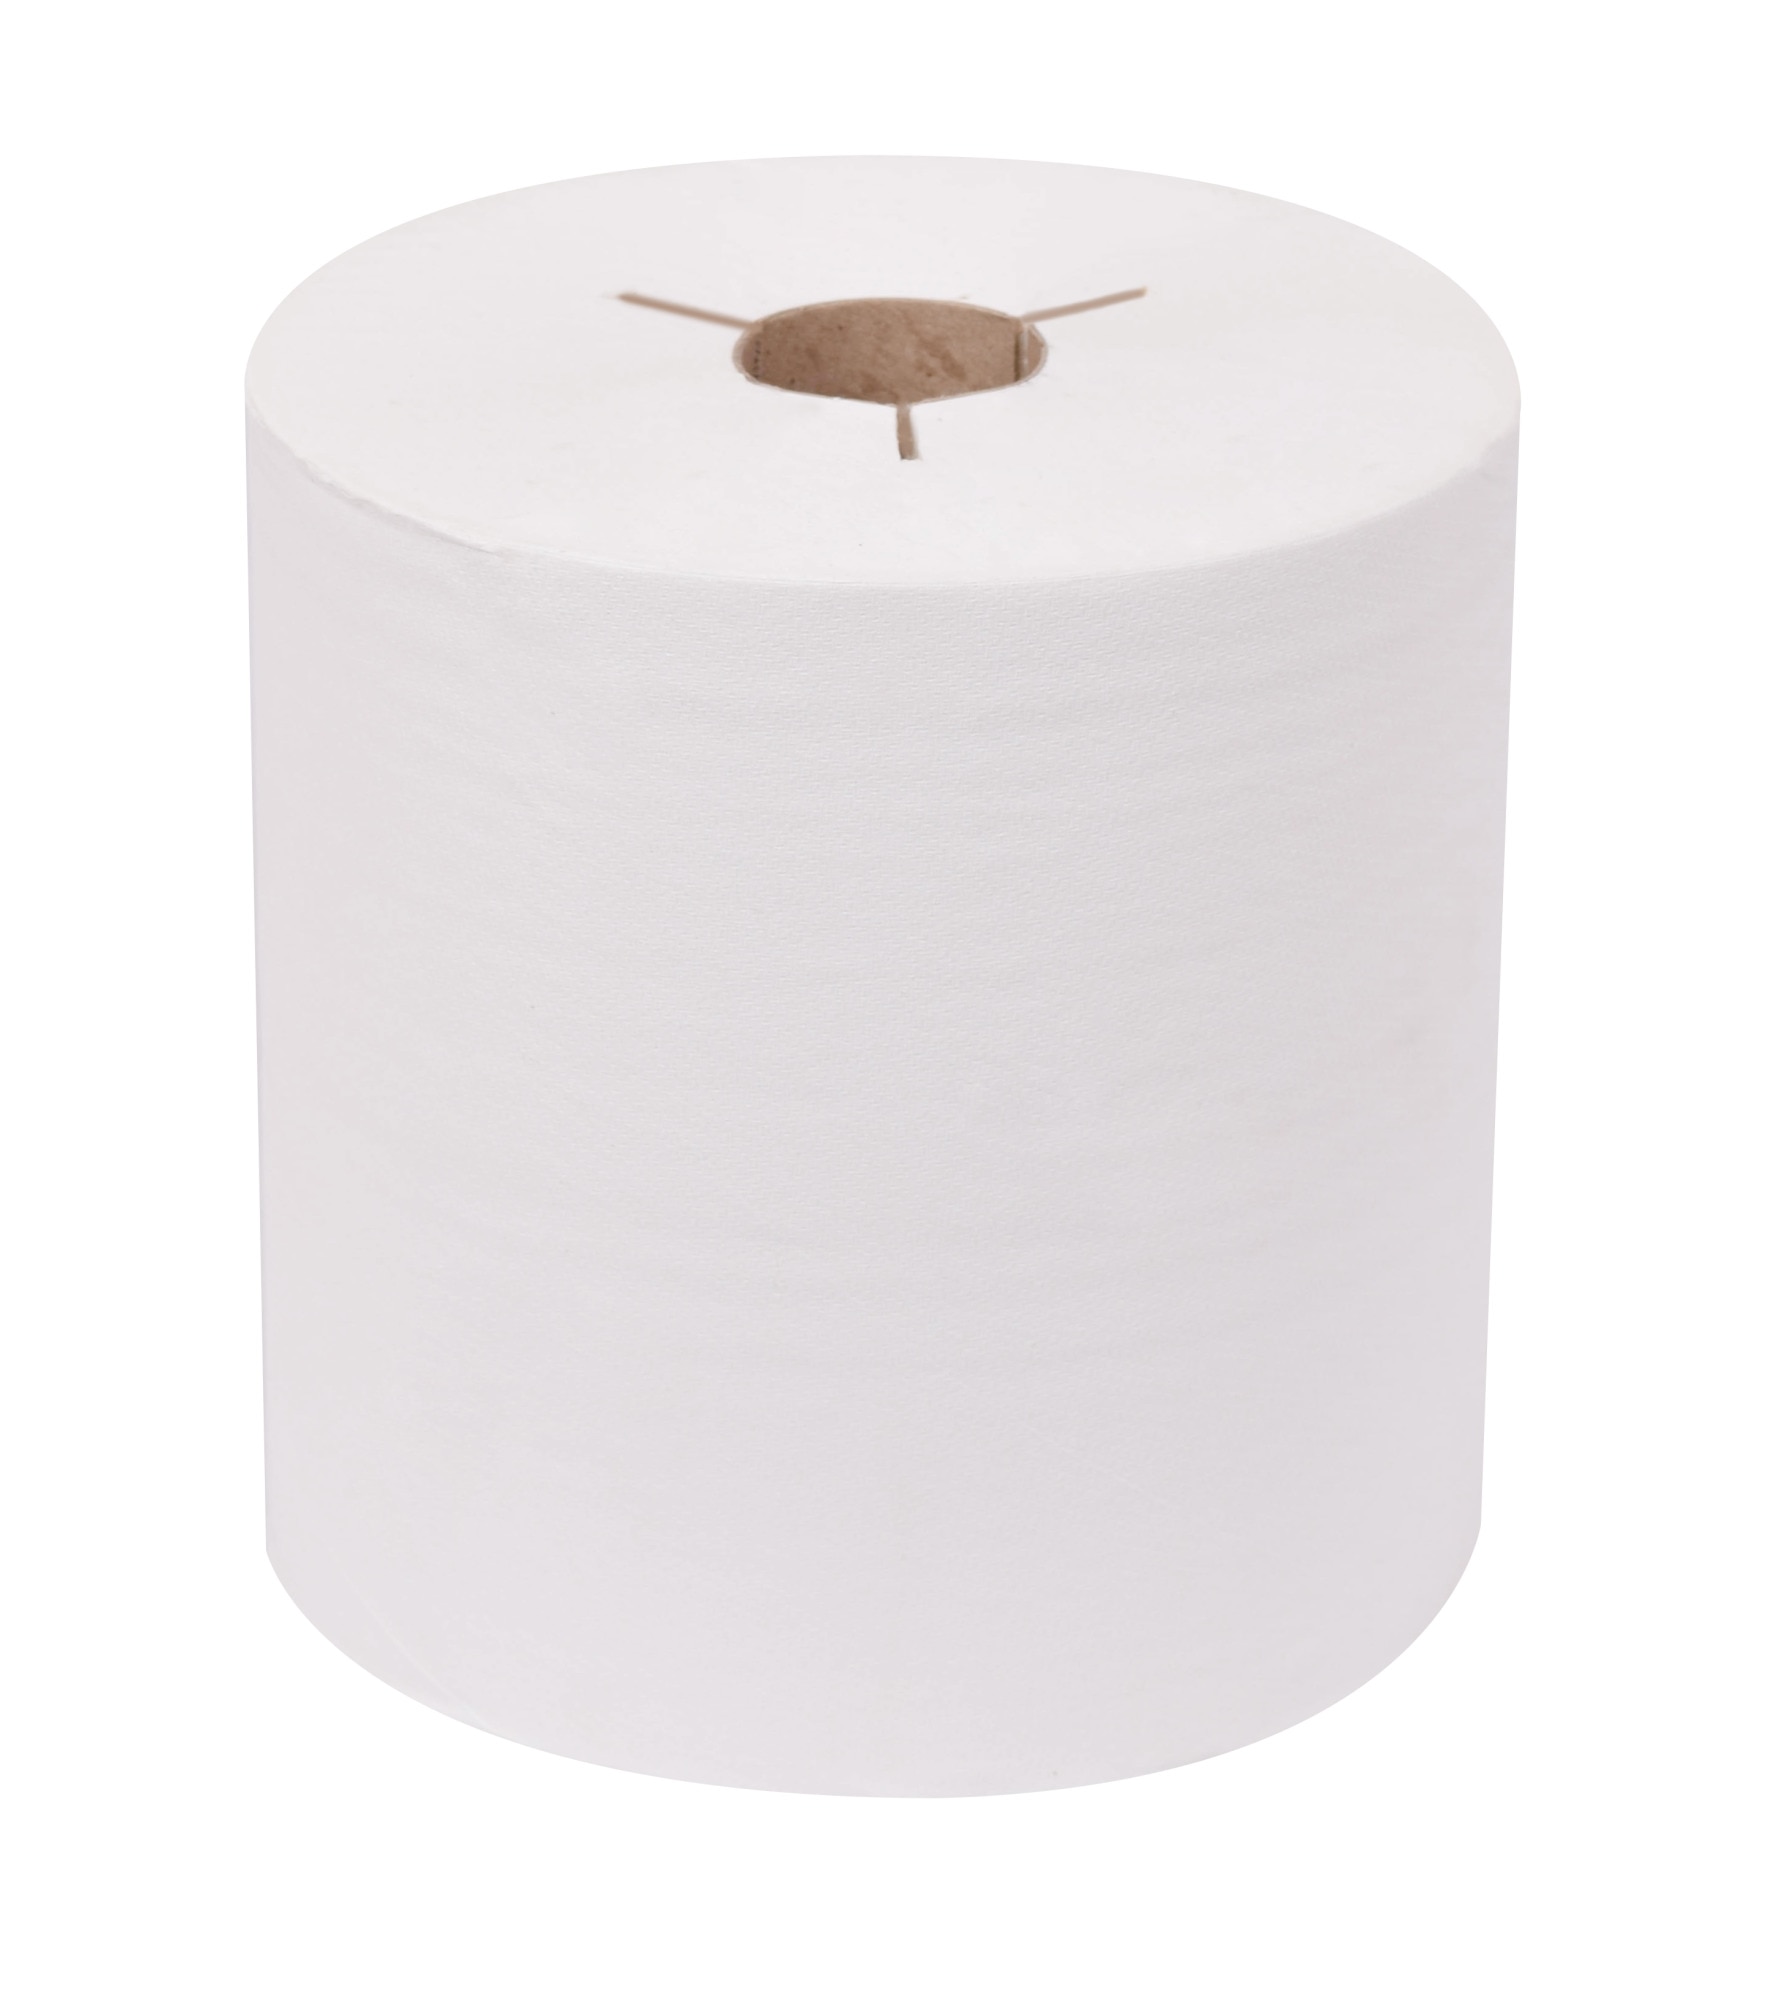 Tork Universal Hand Towel Roll | 8031600 | Paper towels | Refill